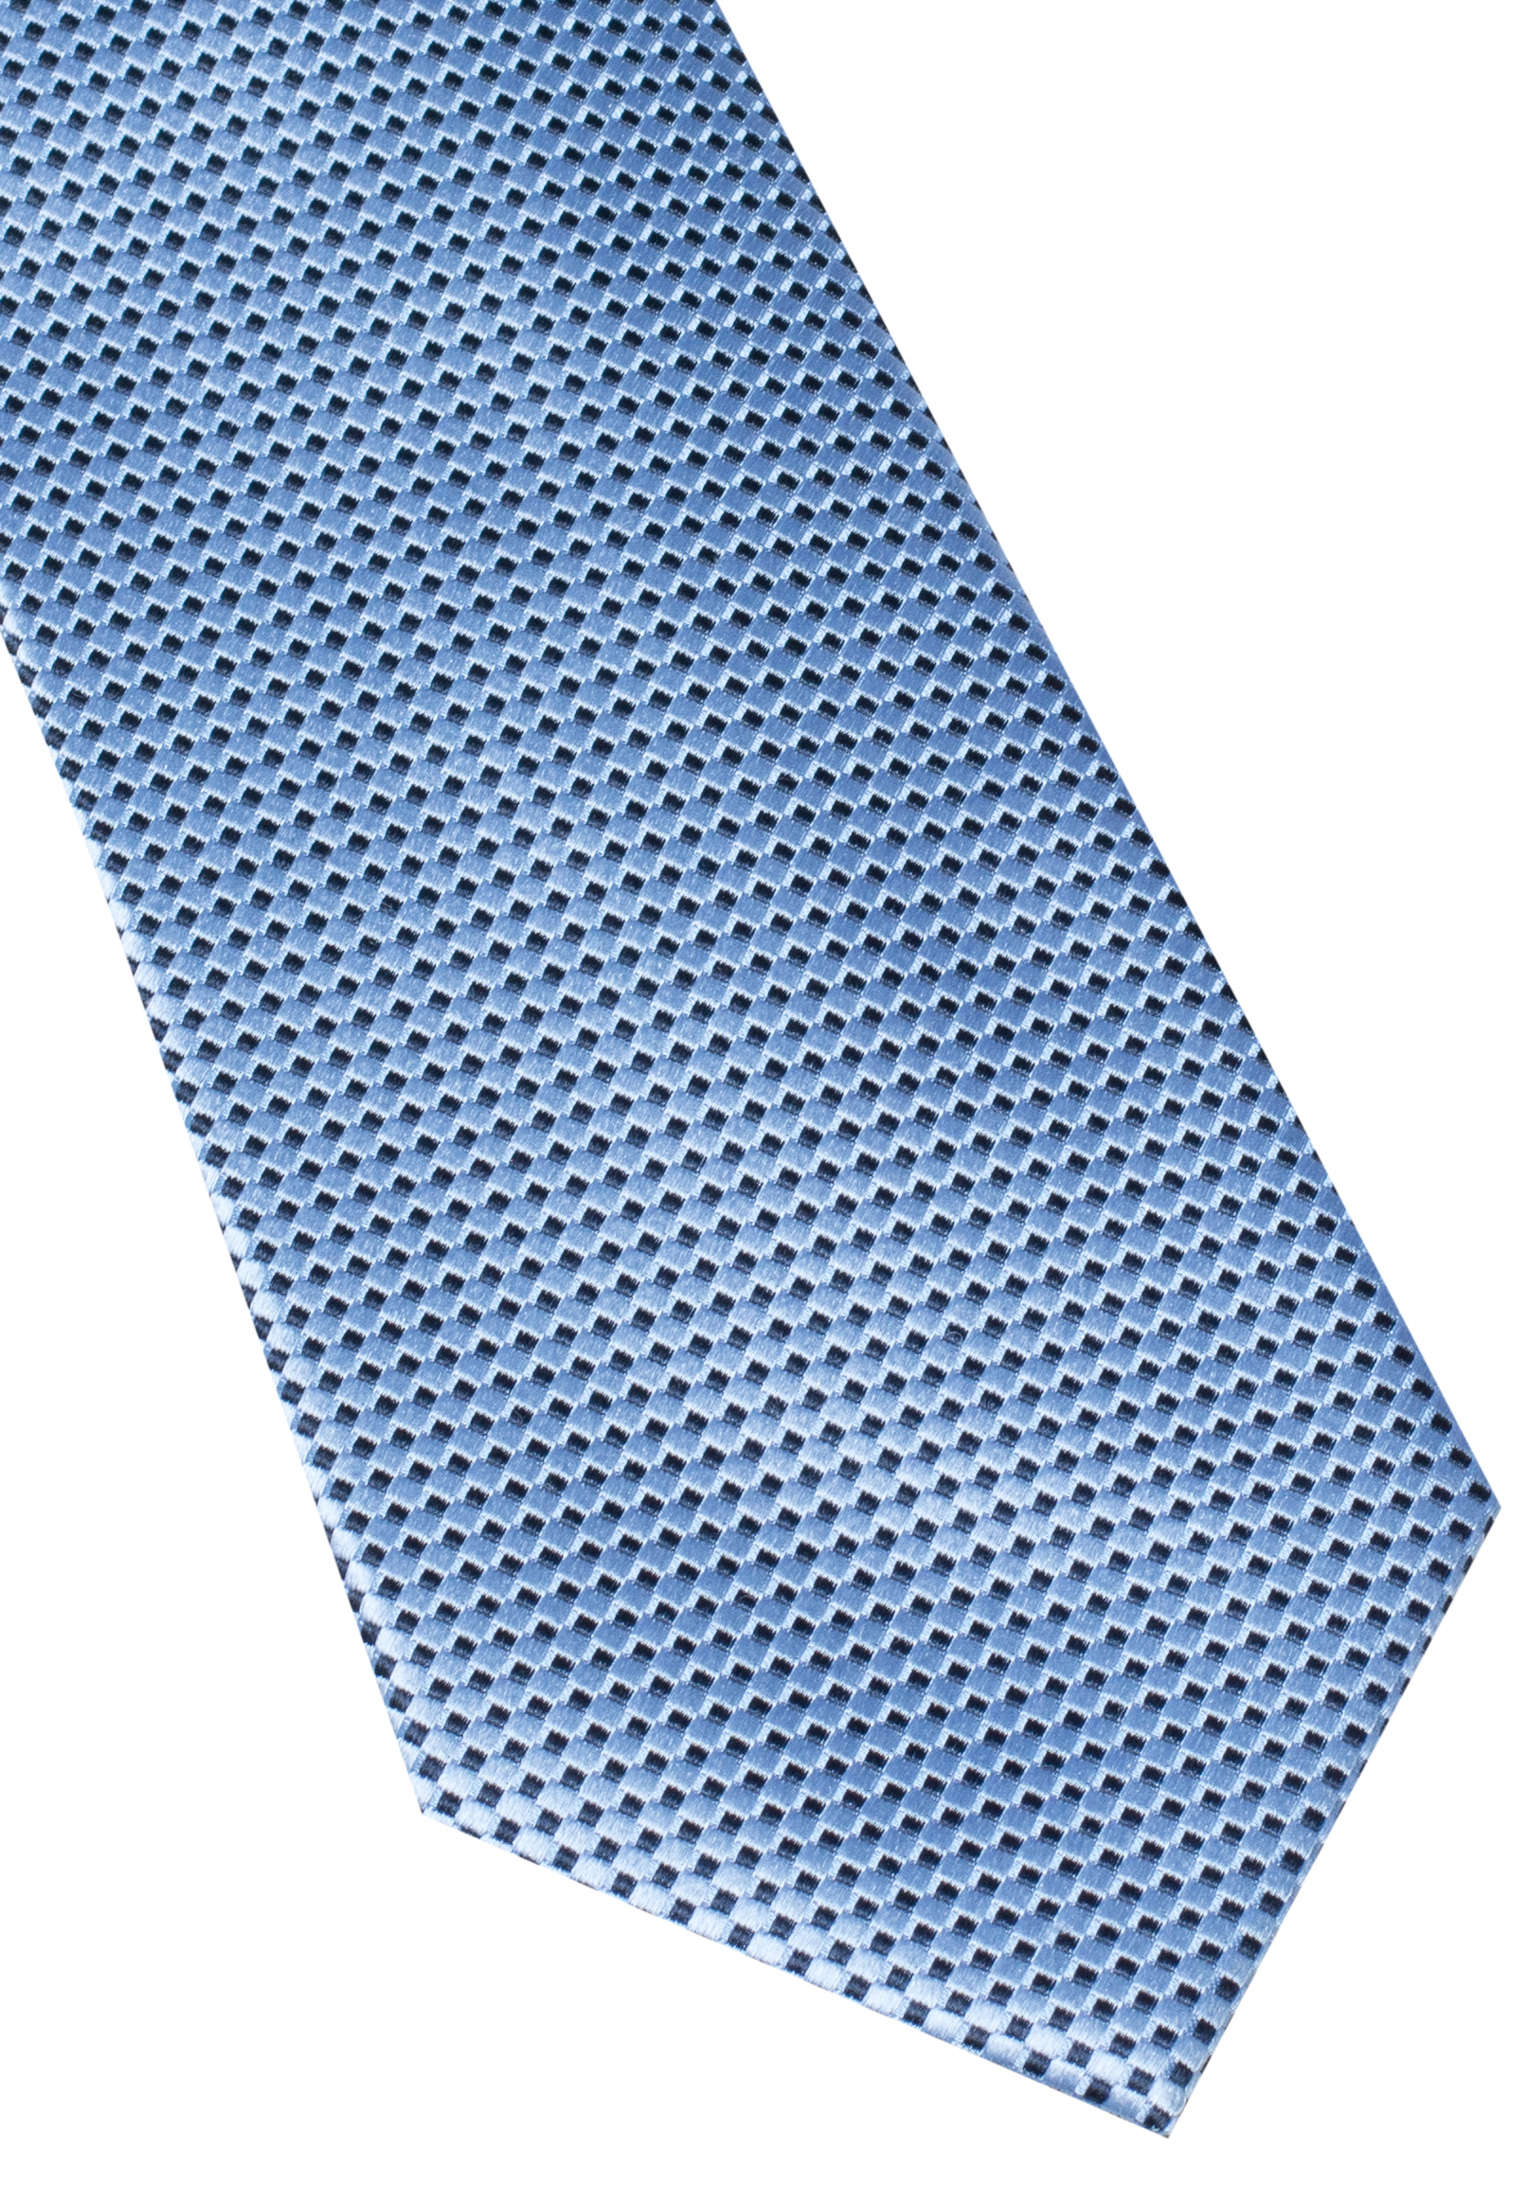 Tie in light blue structured